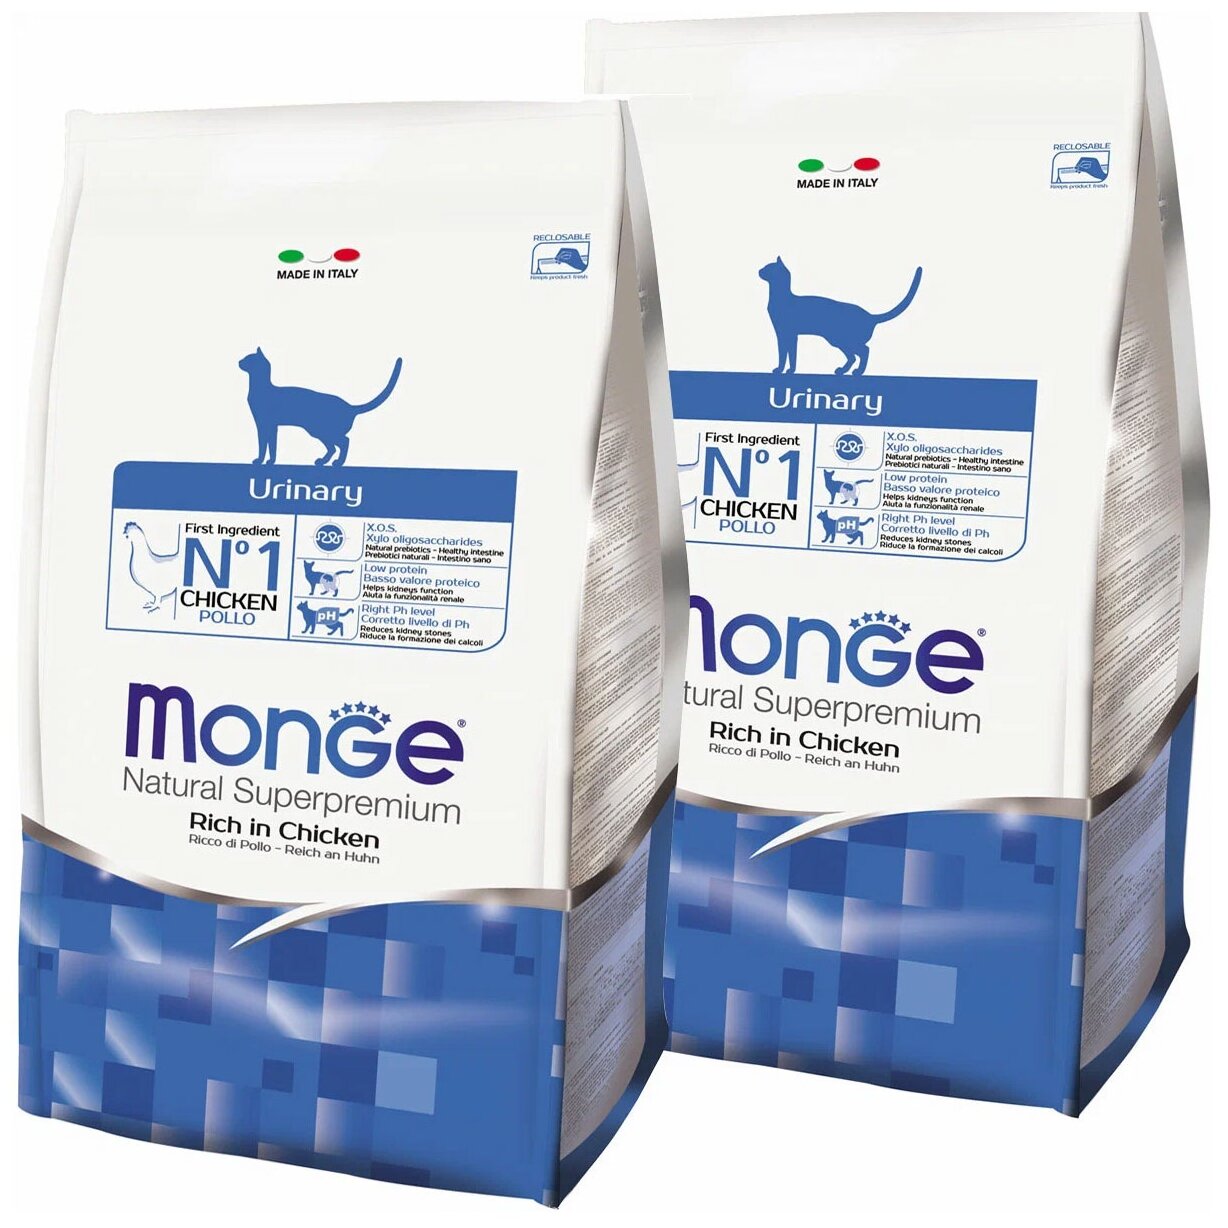 Сухой корм для кошек Monge Natural Superpremium Cat Urinary Chicken, для профилактики МКБ, с курицей, 2 шт. х 1.5 кг